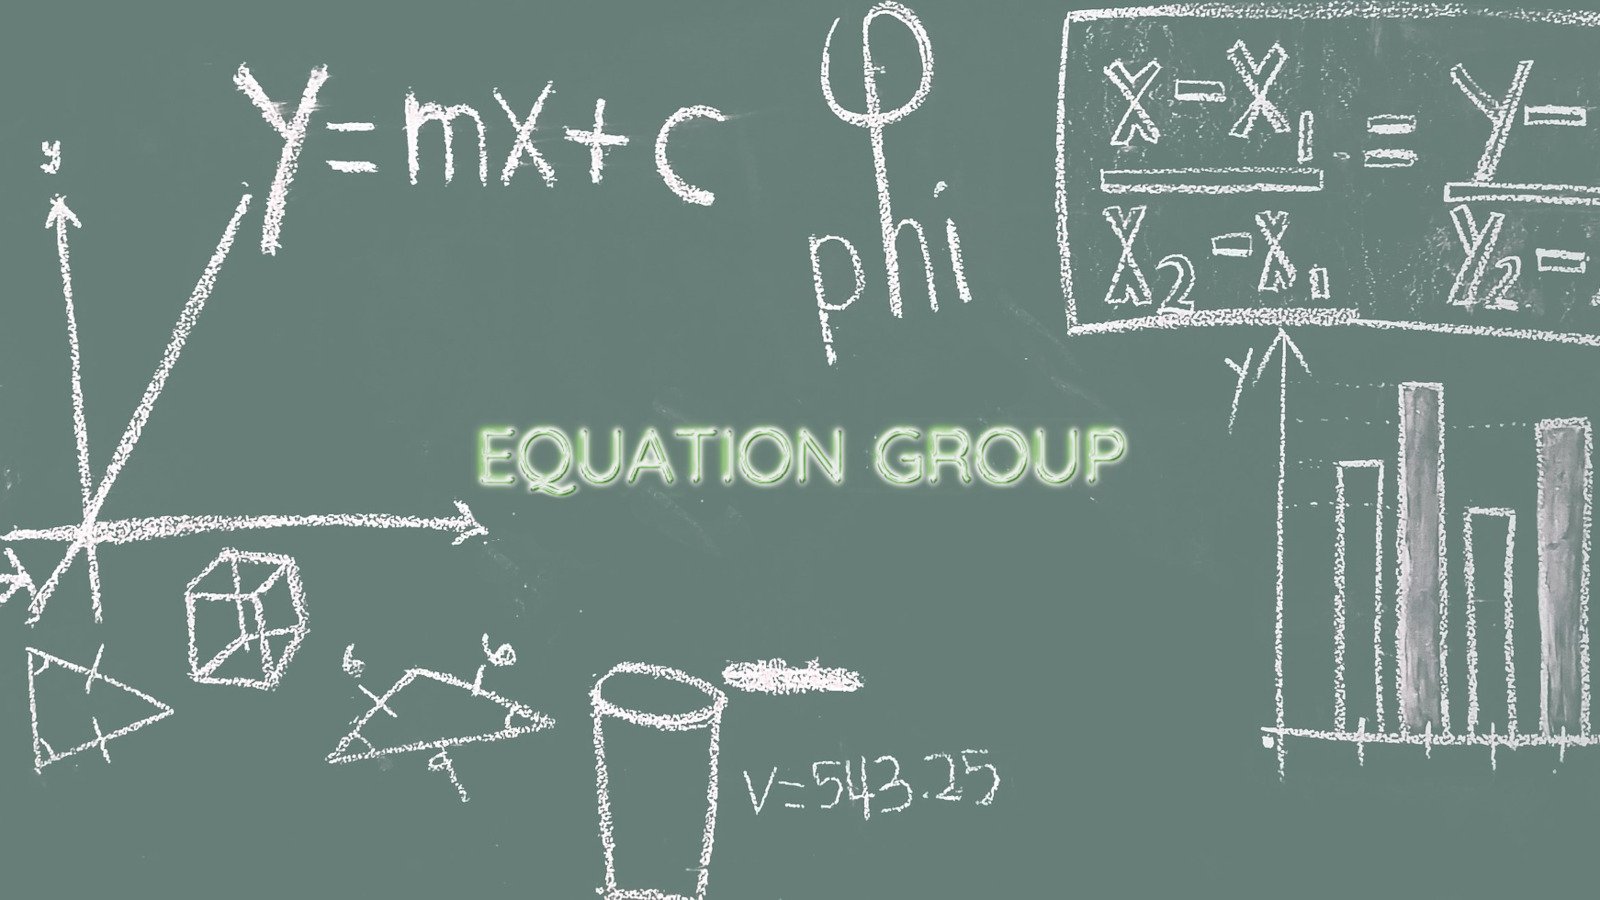 EquationGroup